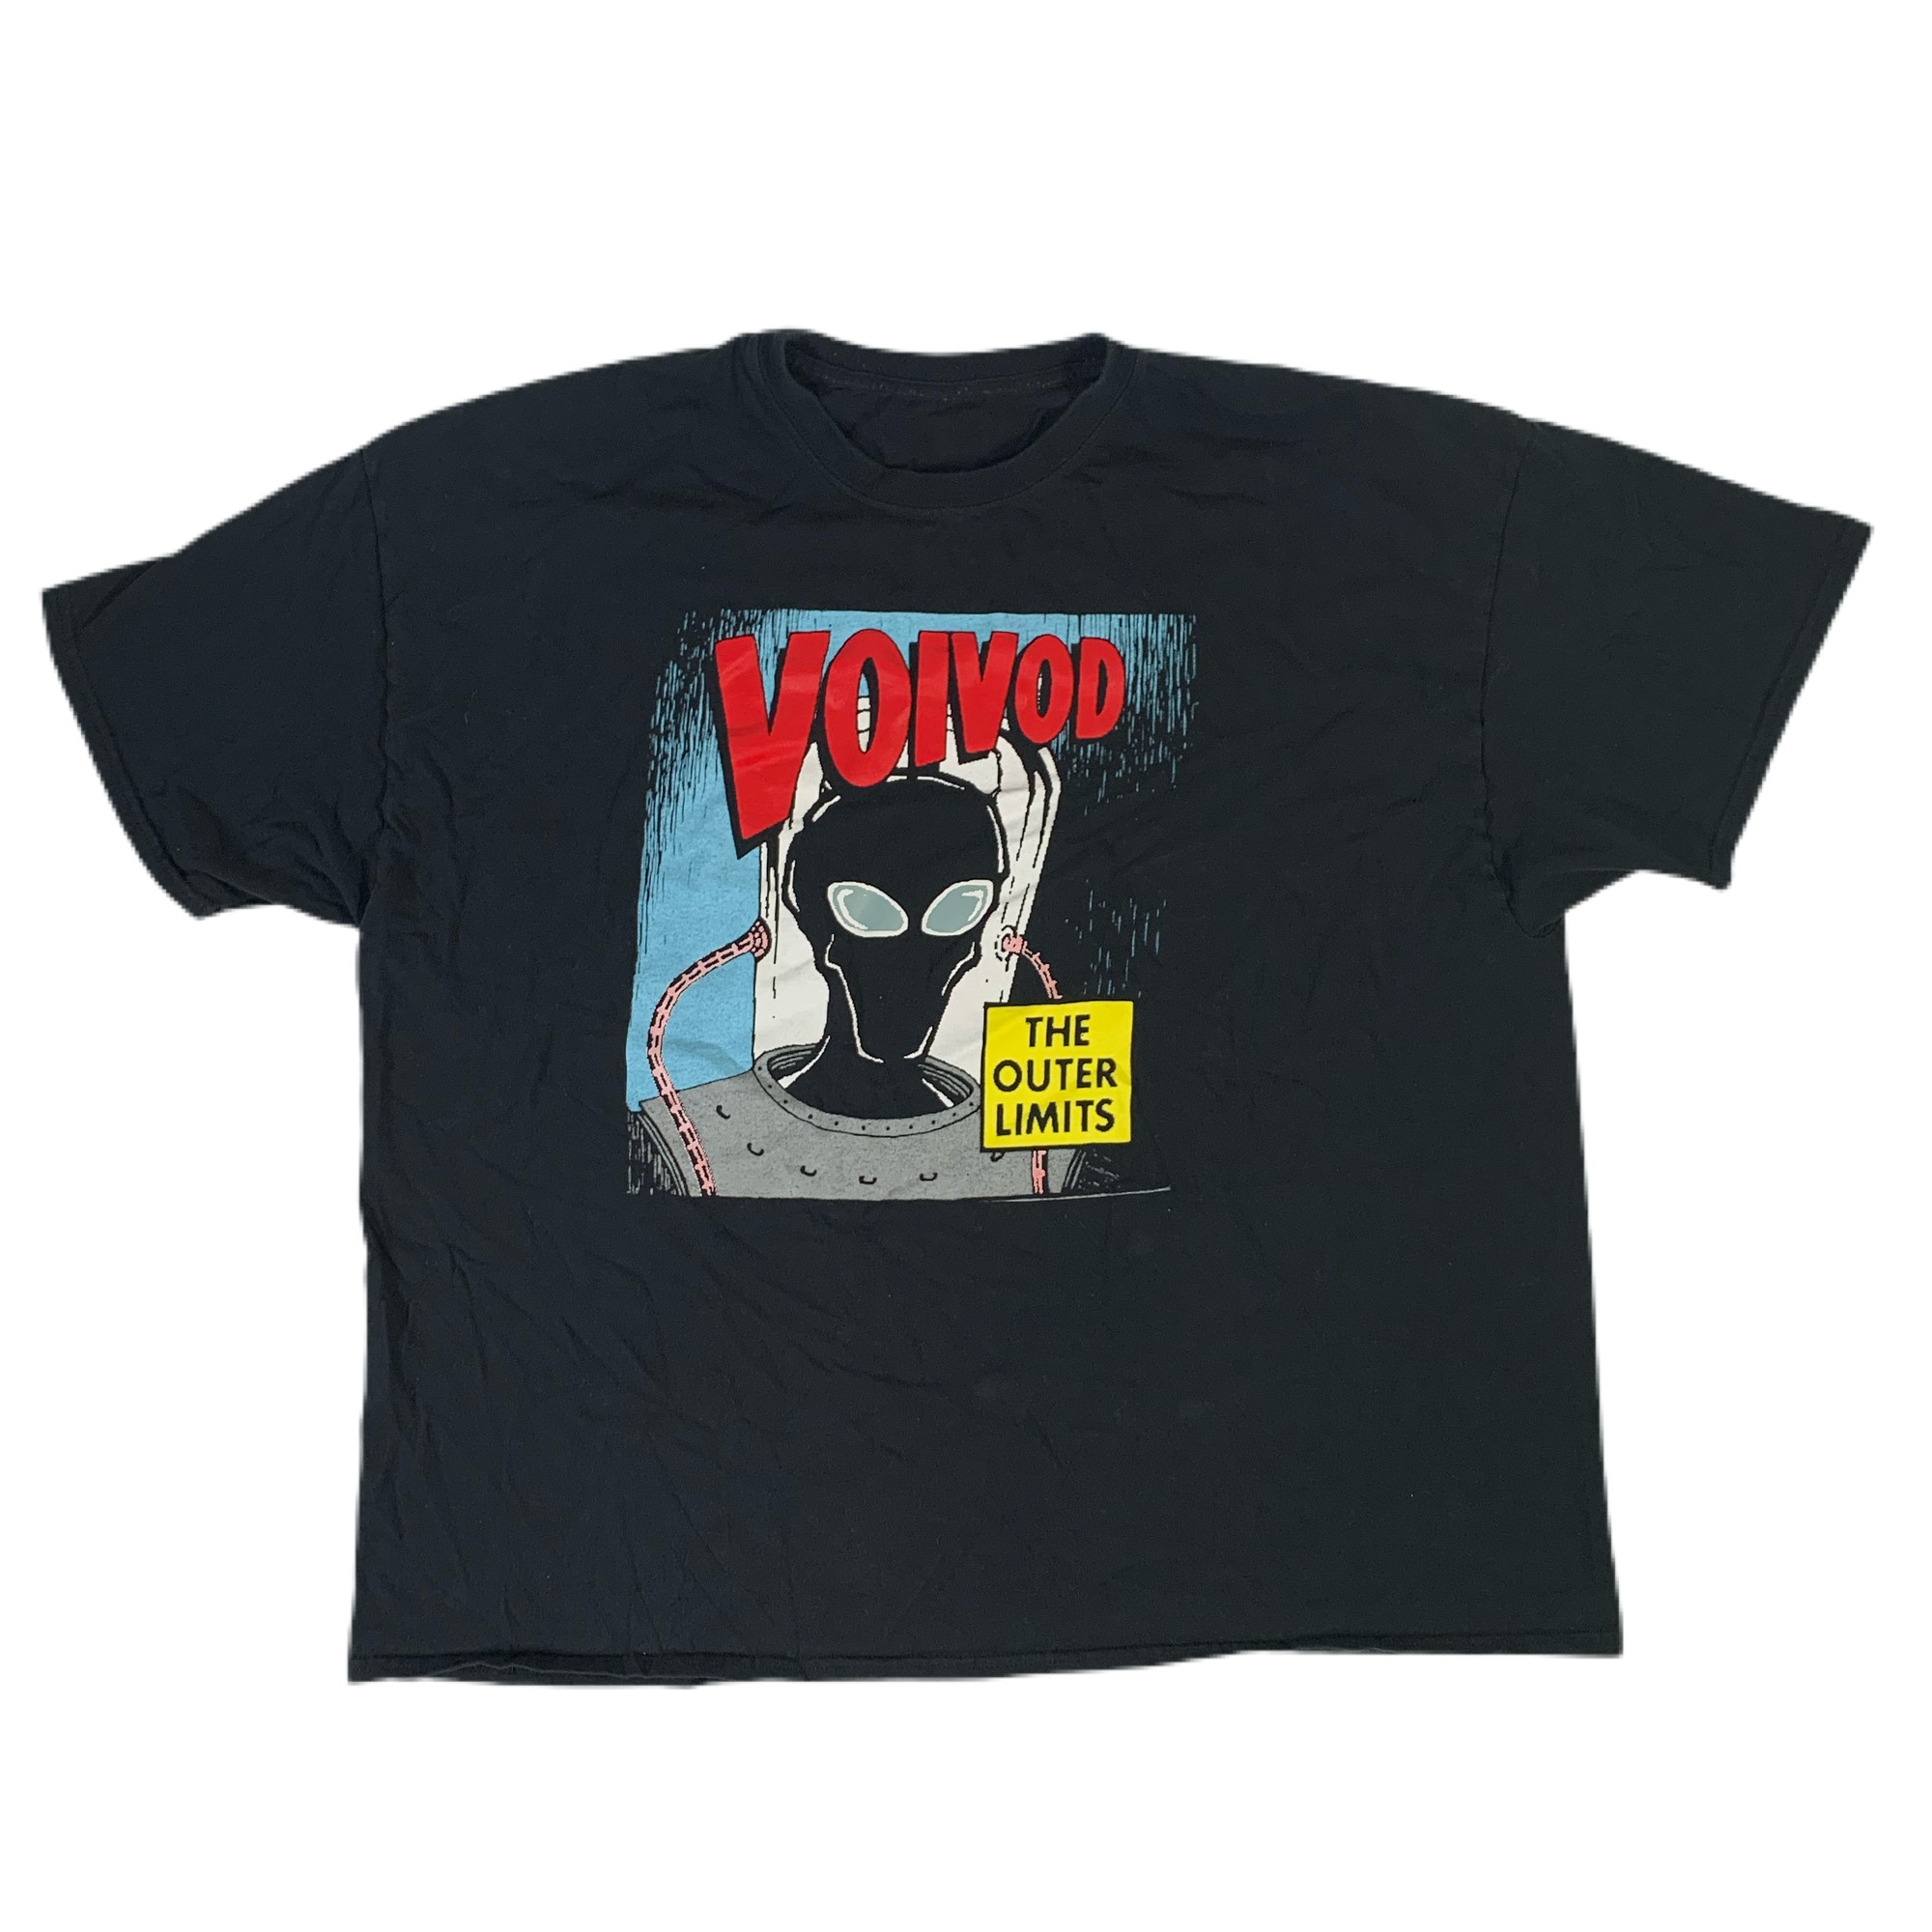 Vintage Voivod "Outer Limits" T-Shirt - jointcustodydc